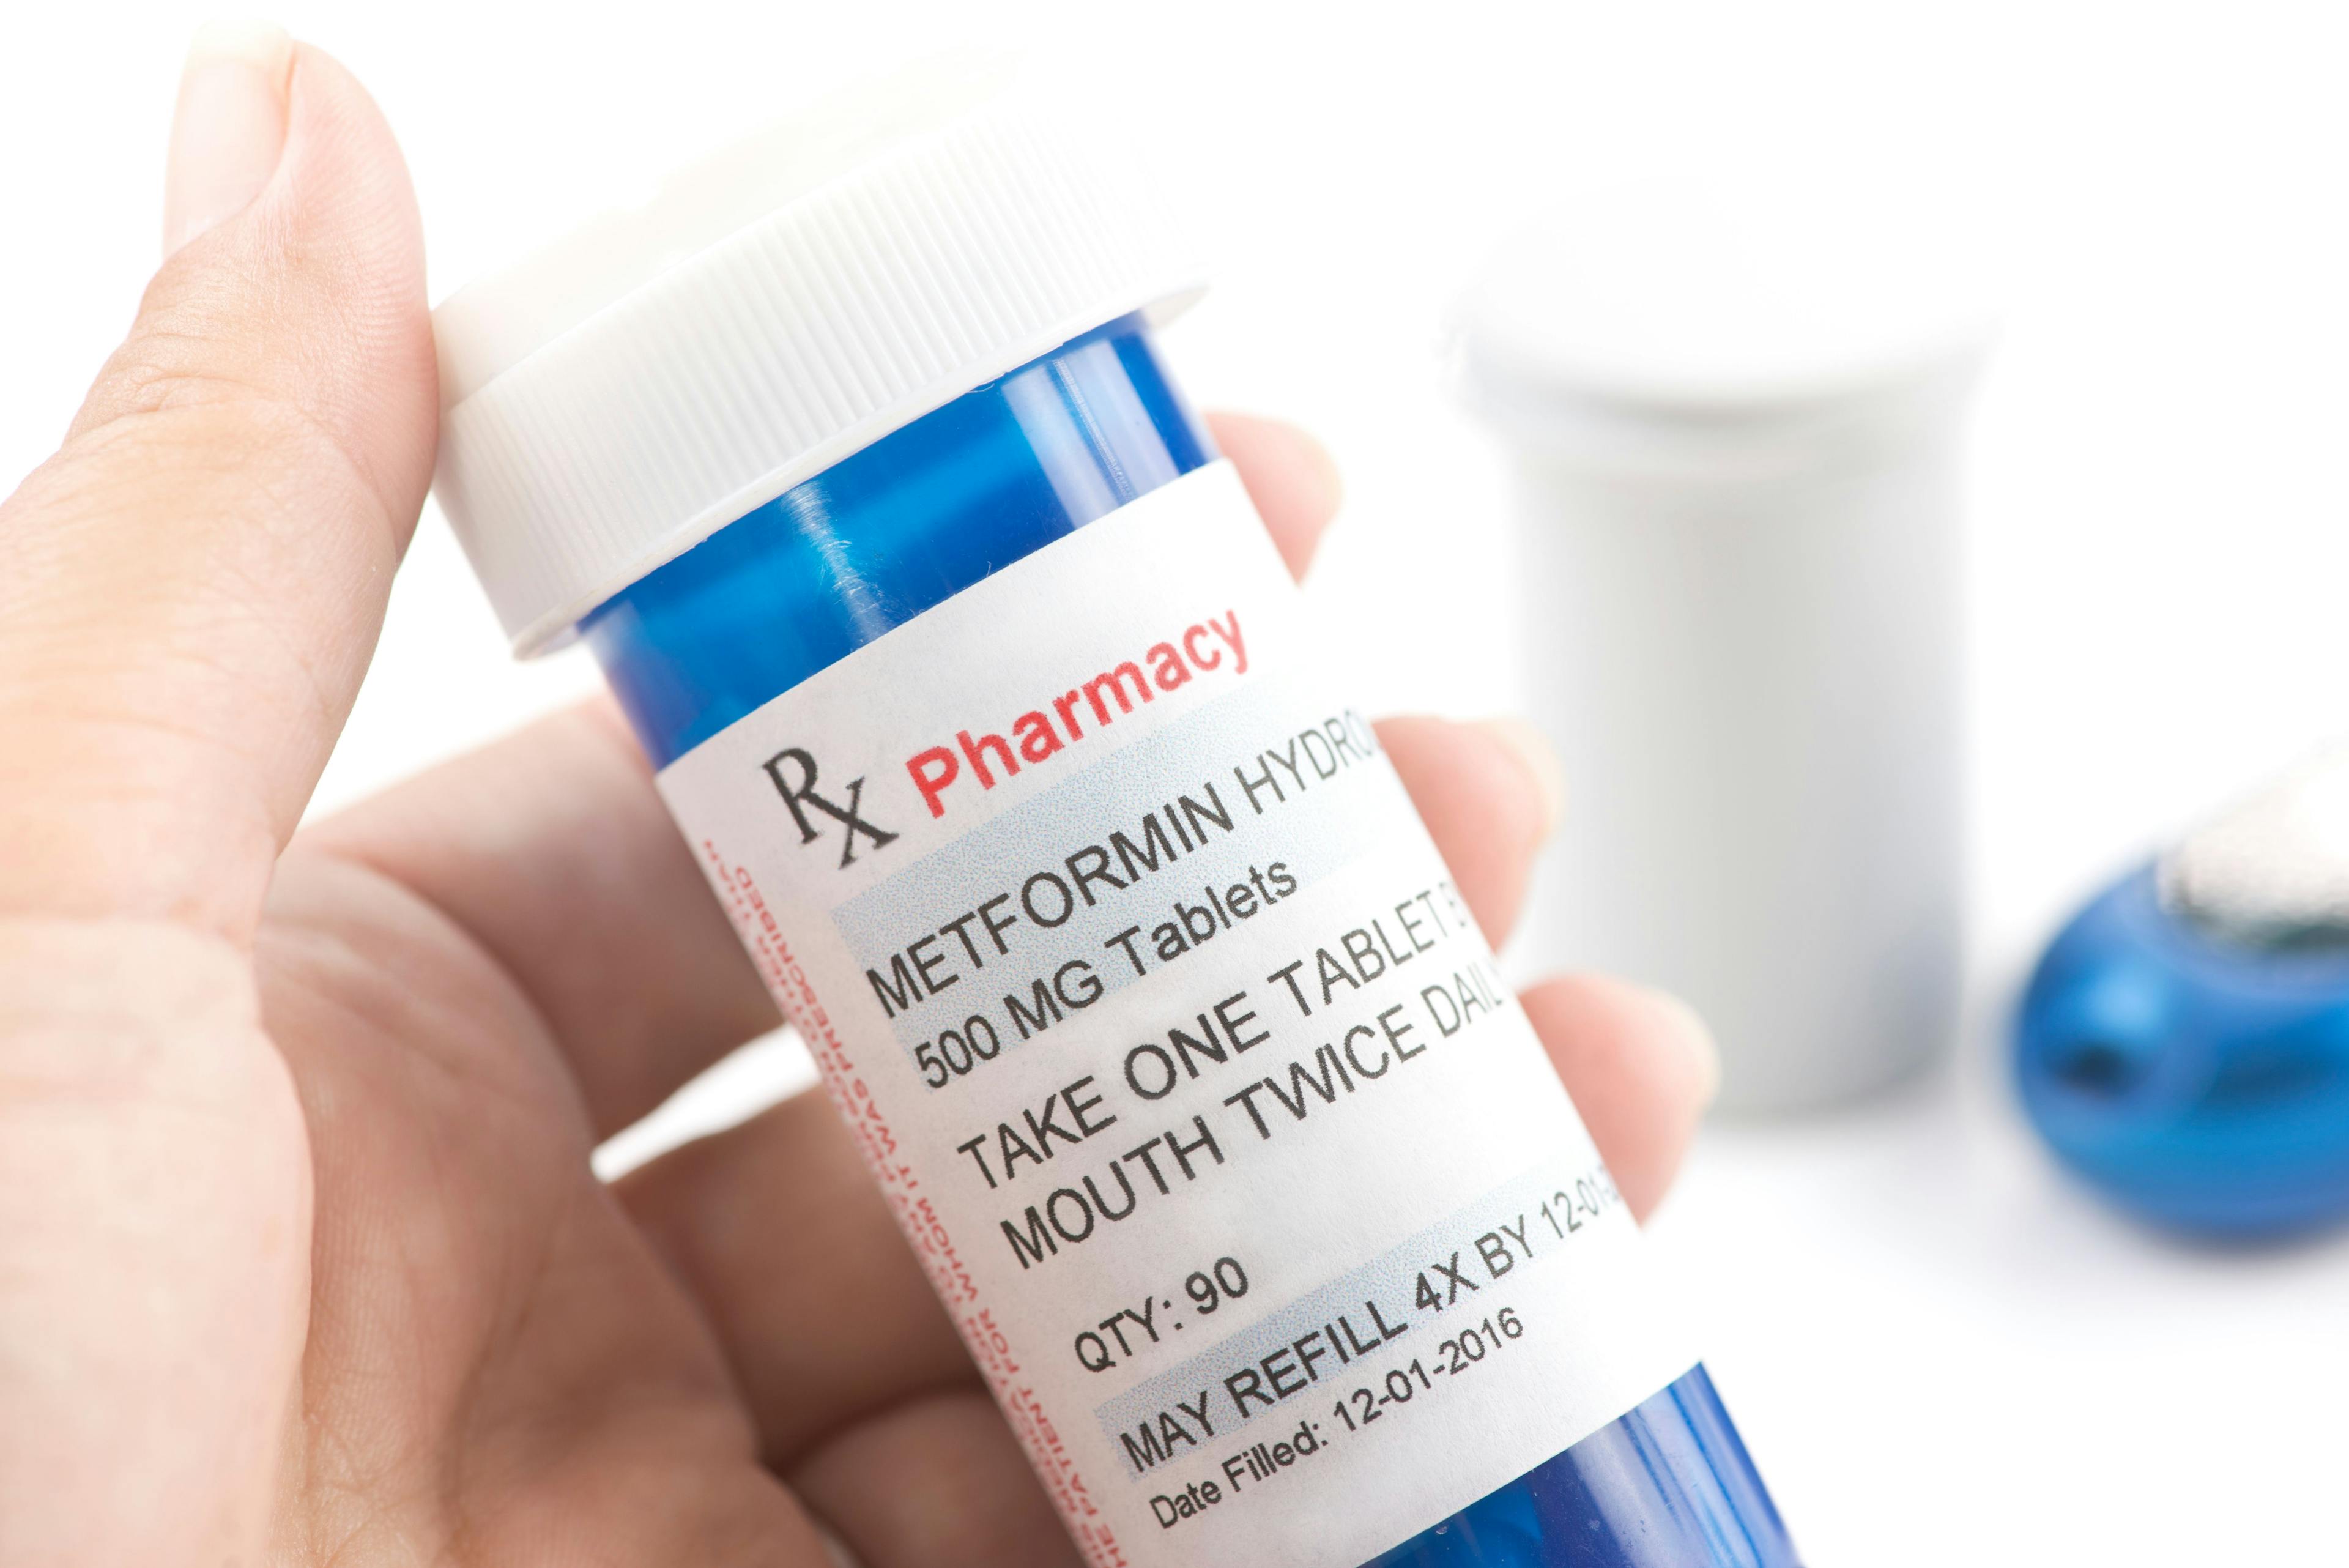 Patient holding metformin prescription | Image Credit: Sherry Young - stock.adobe.com